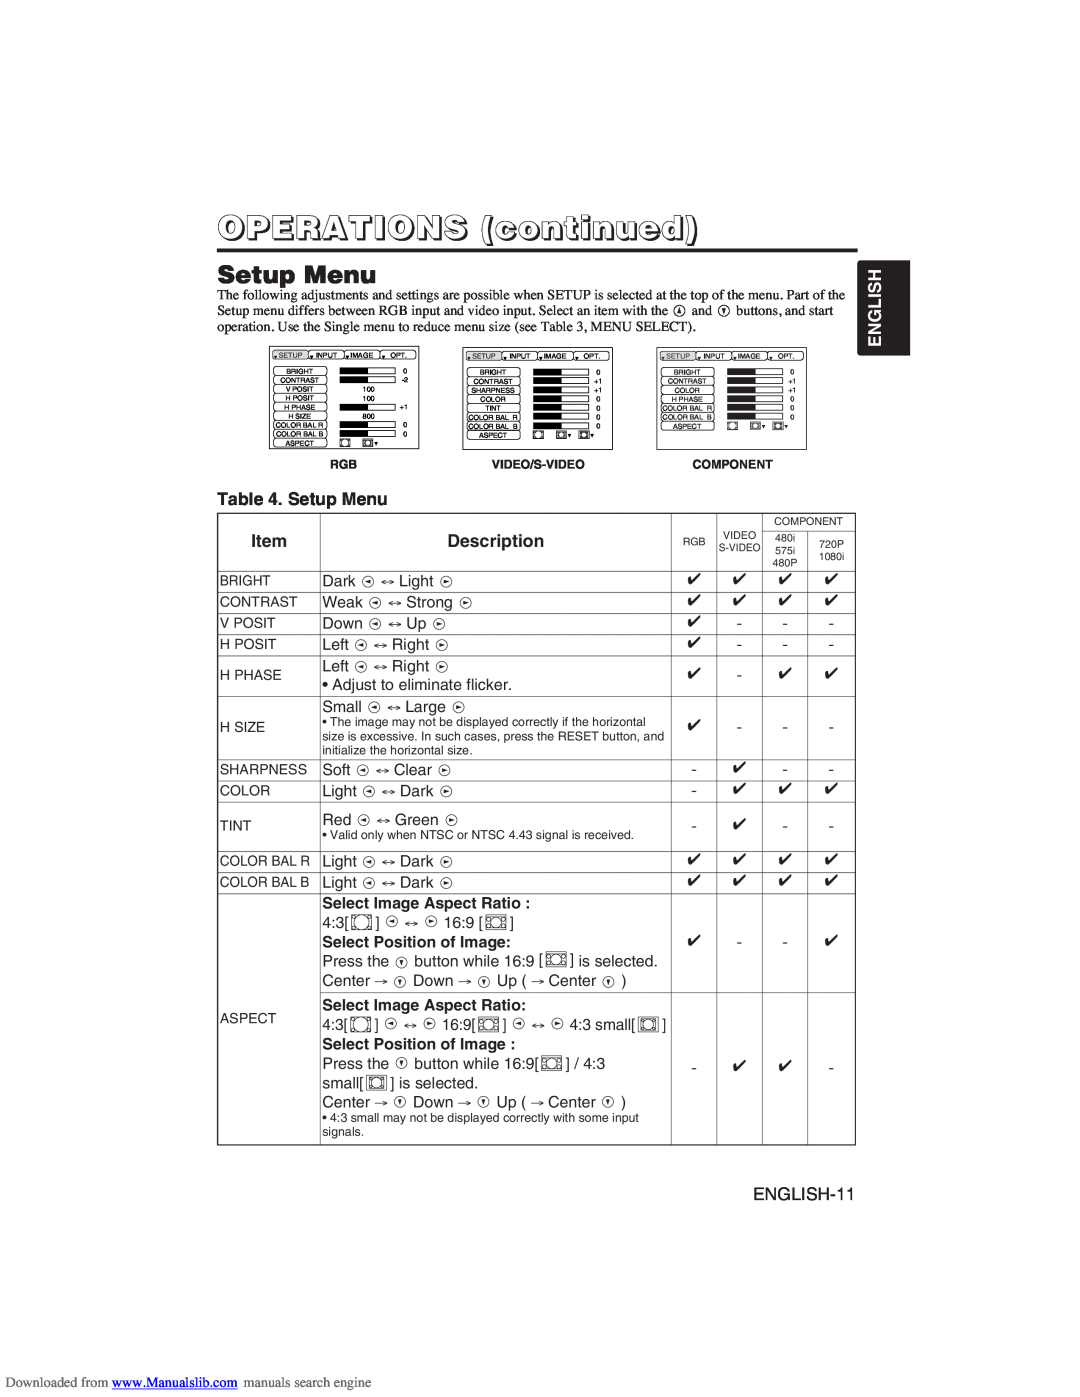 Hitachi CP-X275W user manual Setup Menu, OPERATIONS continued, English, Item, Description 